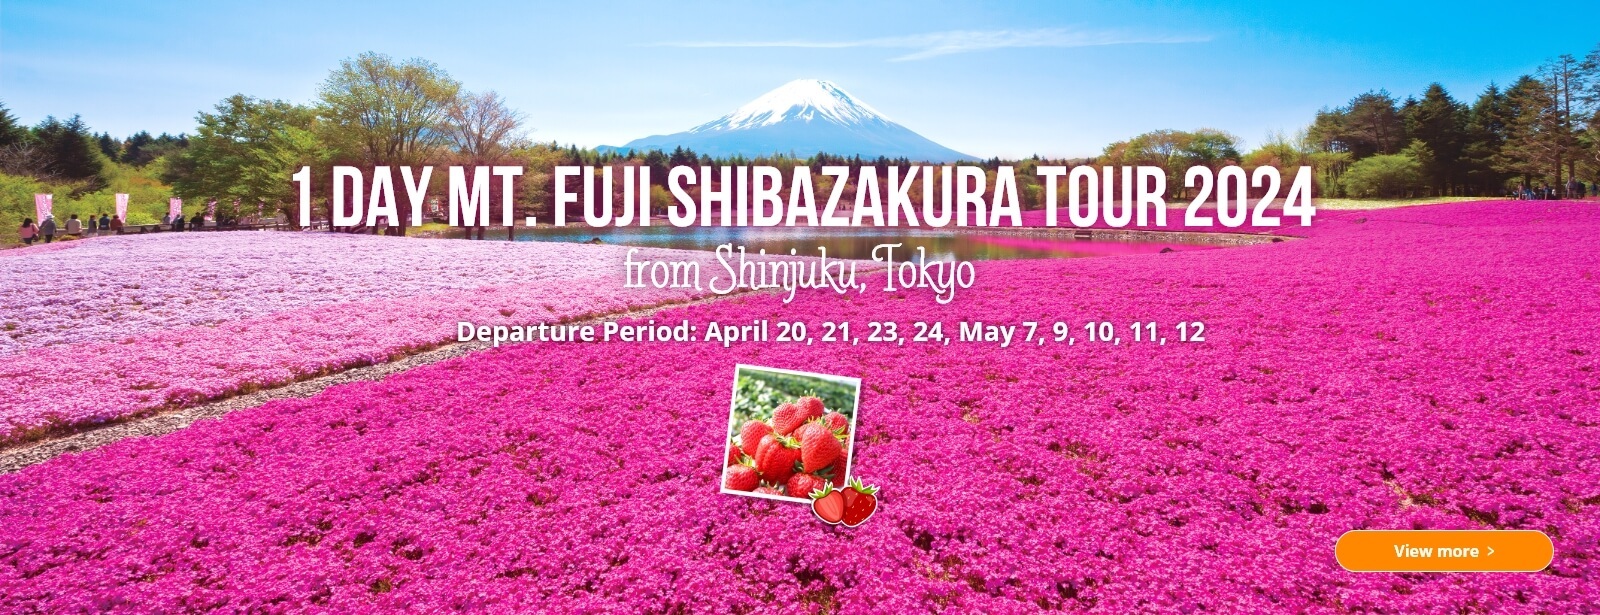 1-Day Mt. Fuji Shibazakura Tour 2024